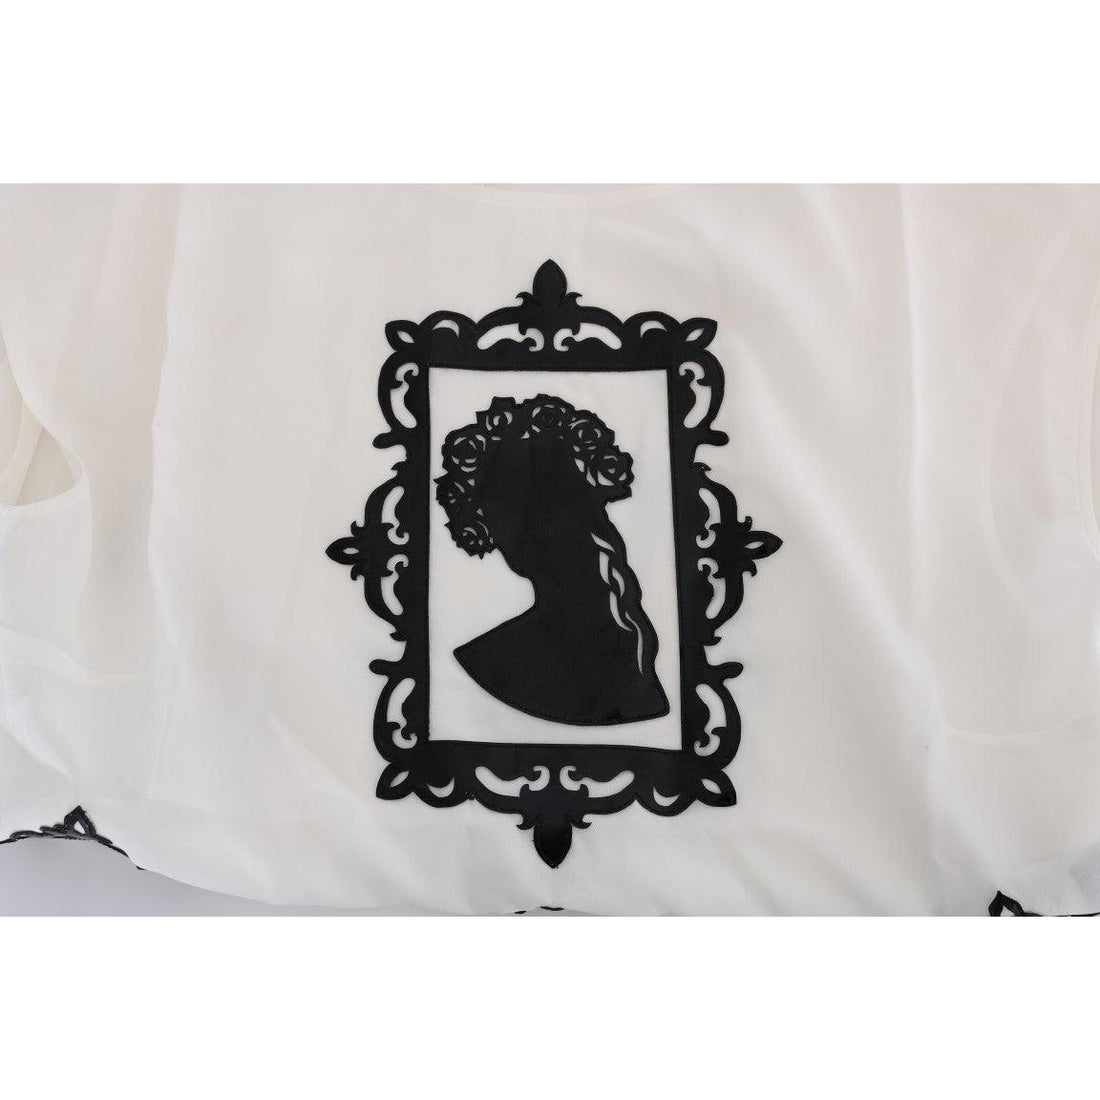 Dolce & Gabbana White Silk Black Frame Blouse - Paris Deluxe